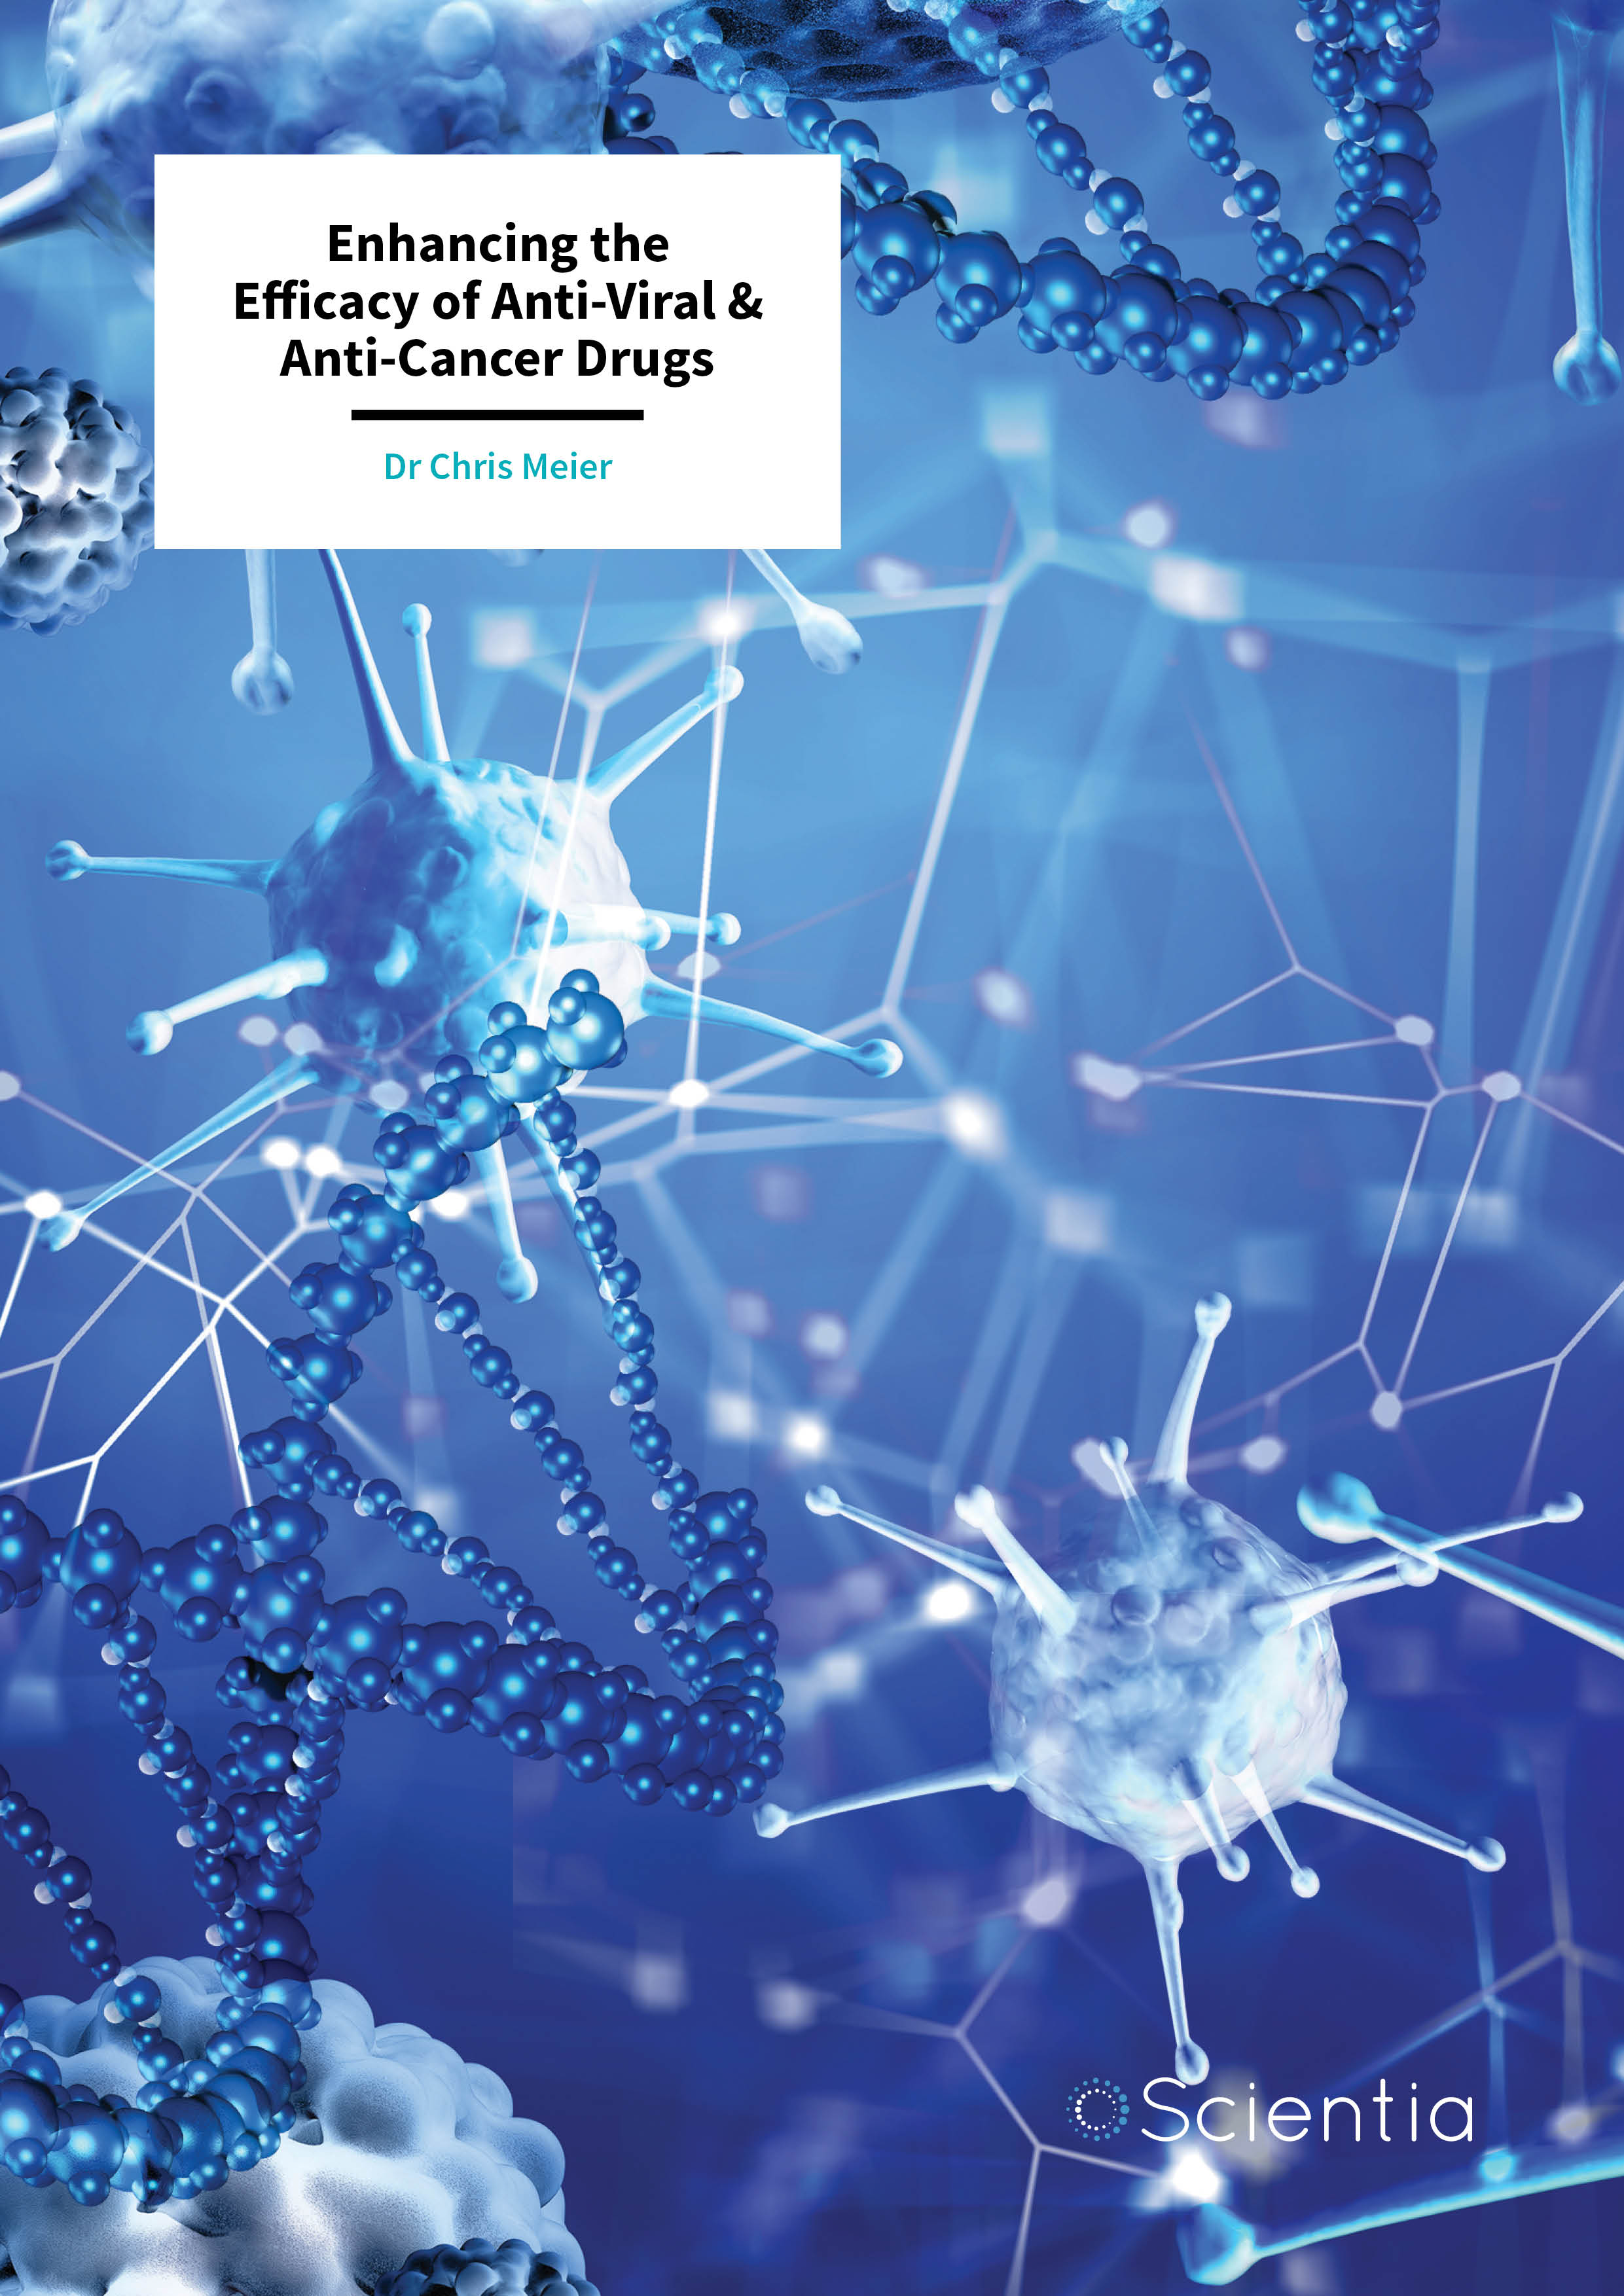 Dr Chris Meier – Enhancing the Efficacy of Anti-Viral & Anti-Cancer Drugs